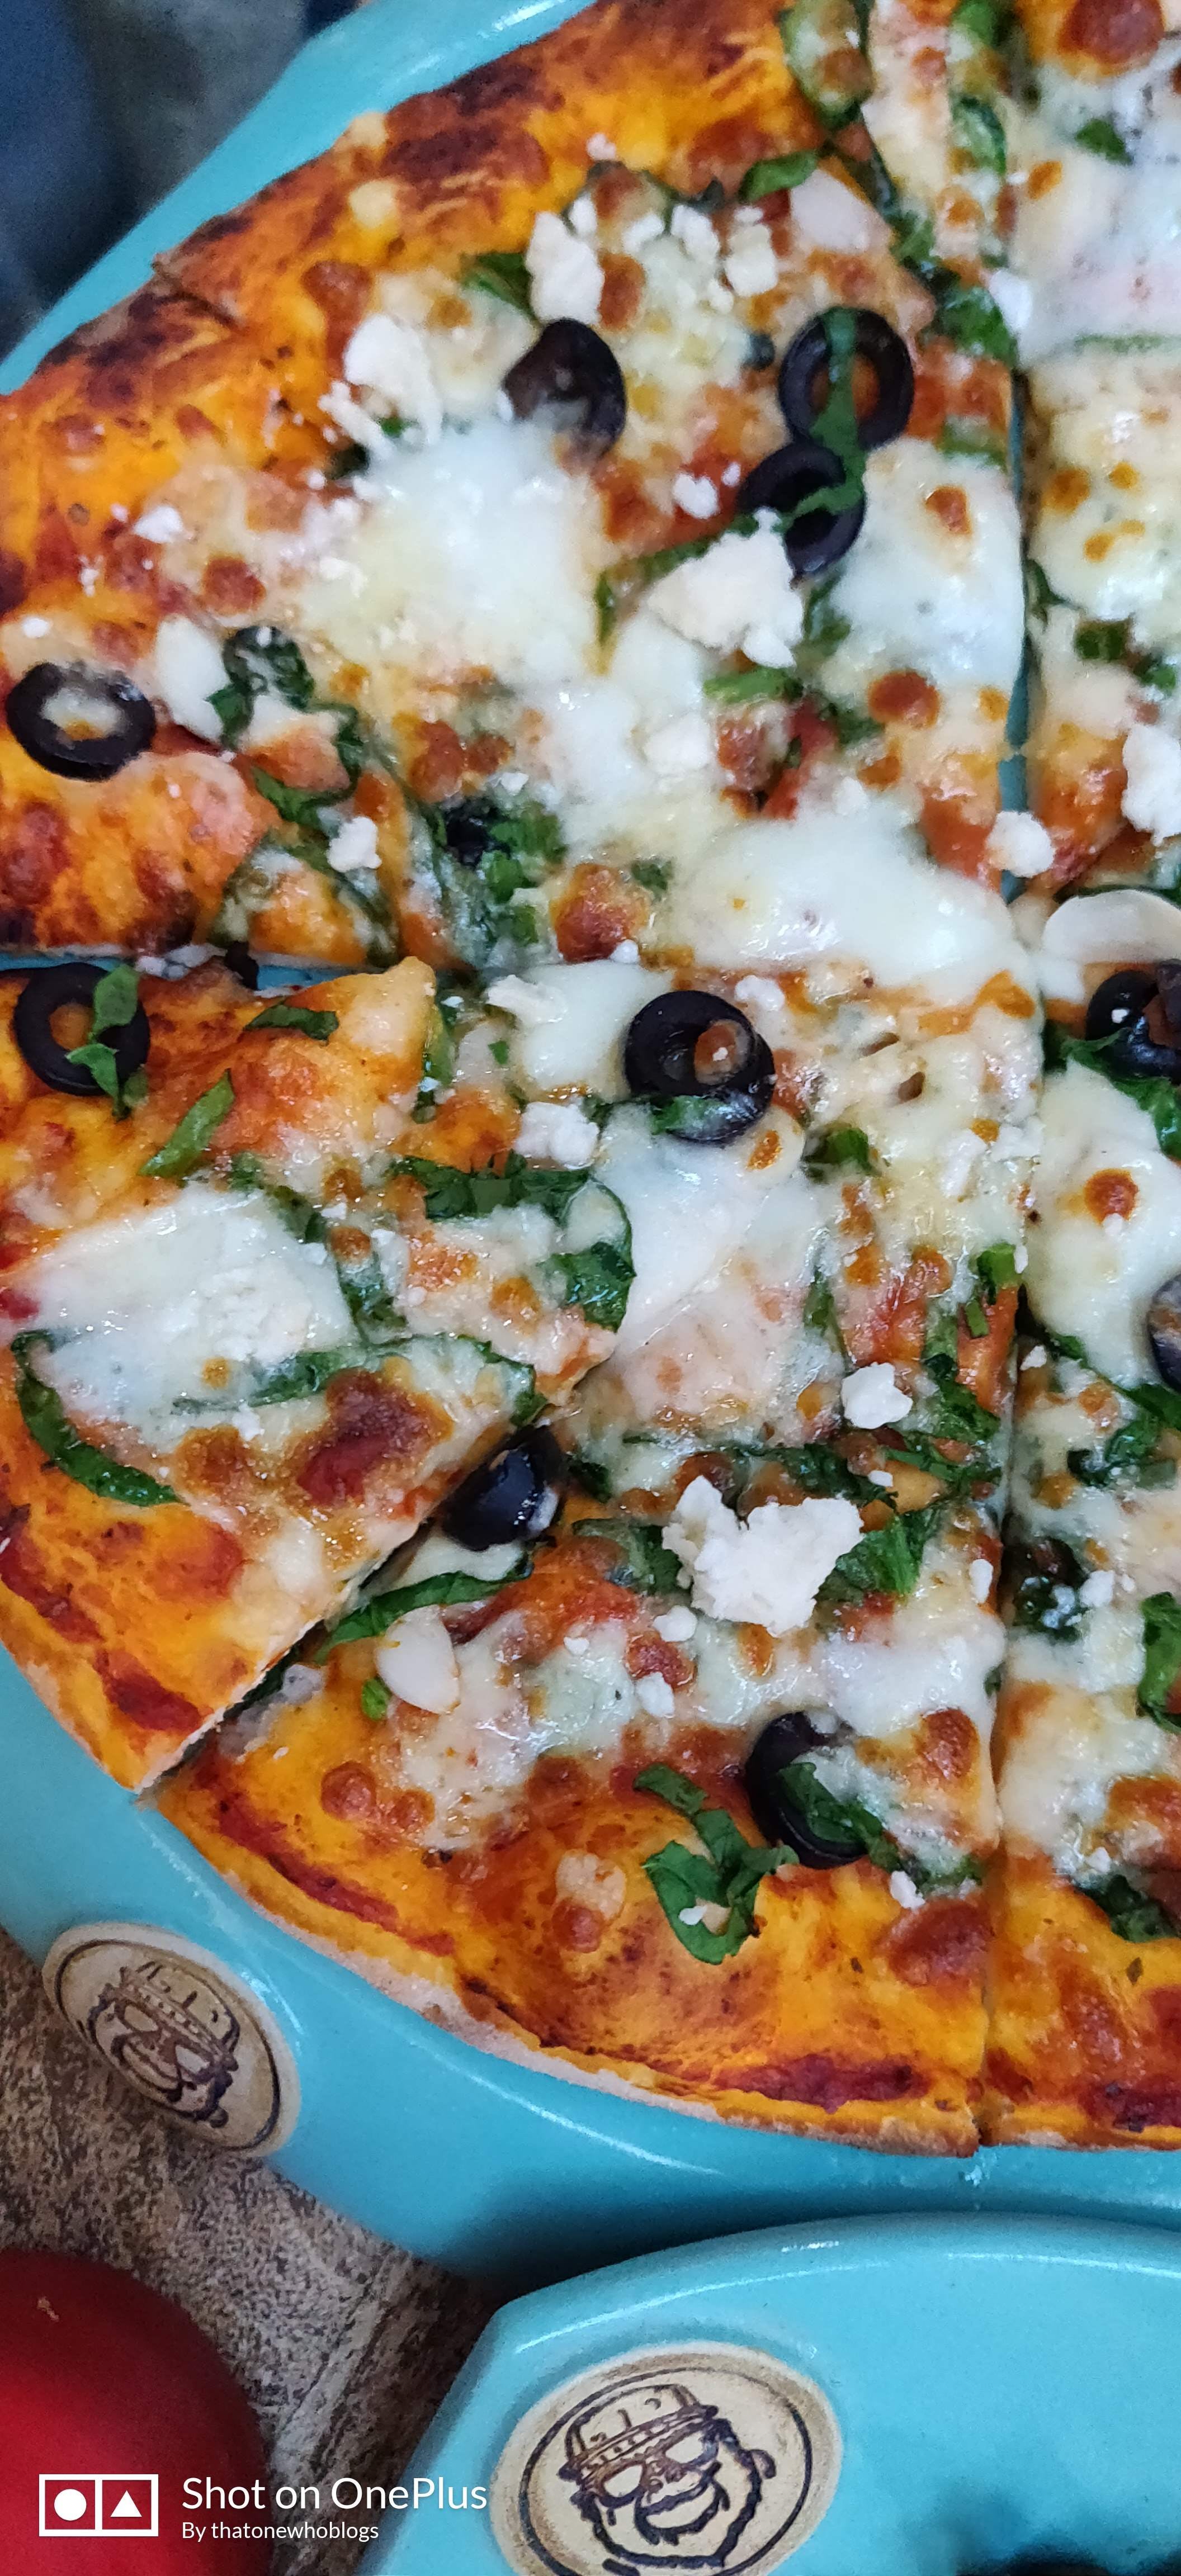 Dish,Food,Cuisine,Pizza,Pizza cheese,Ingredient,California-style pizza,Flatbread,Comfort food,Italian food